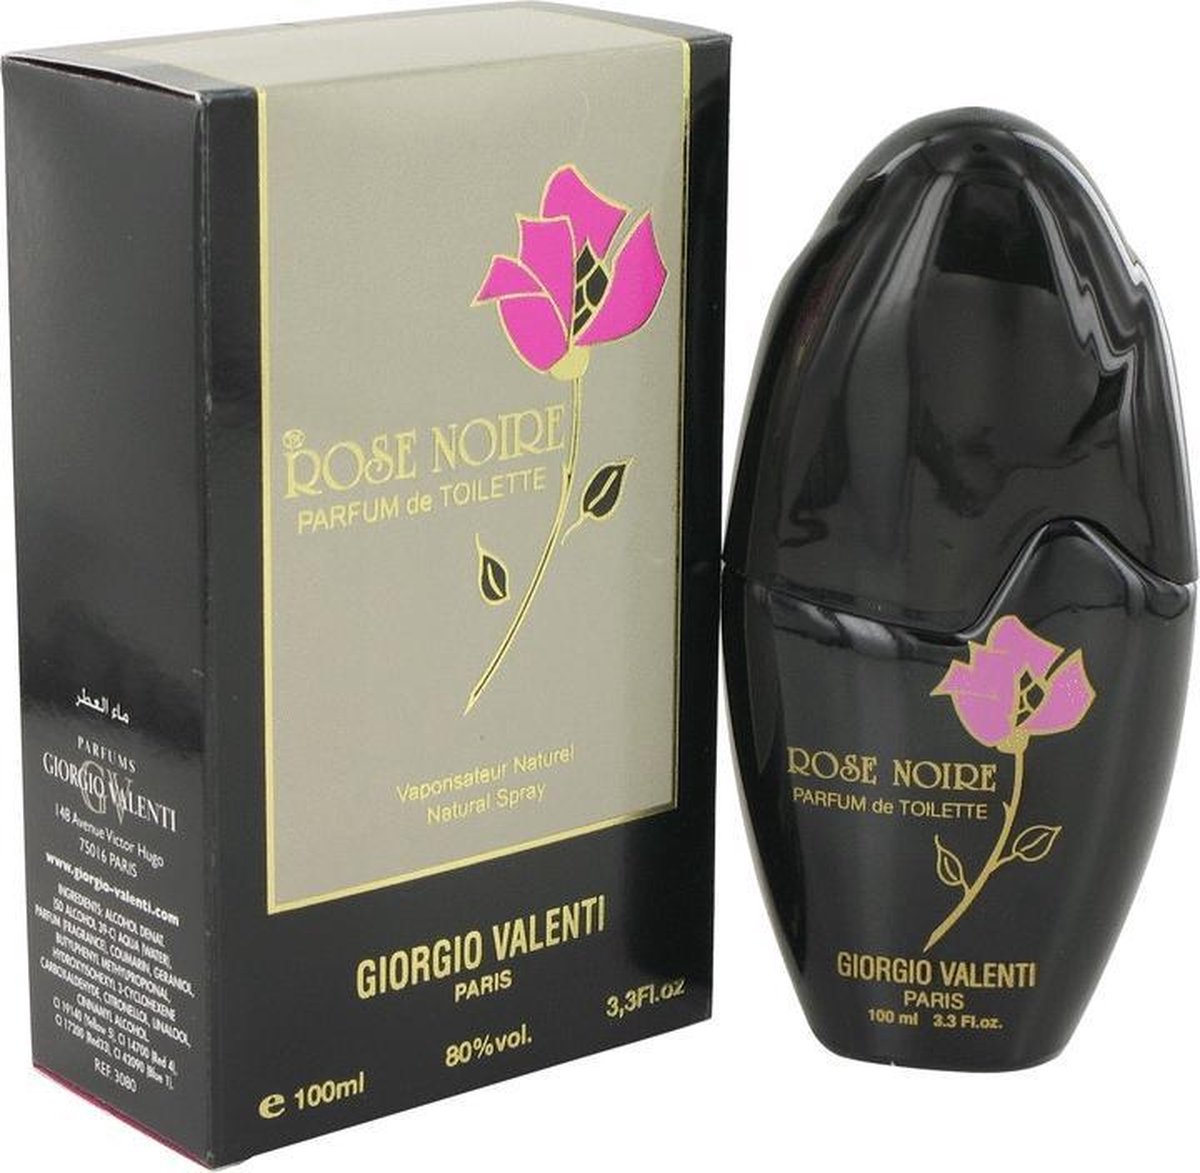 ROSE NOIRE by Giorgio Valenti 100 ml - Parfum De Toilette Spray